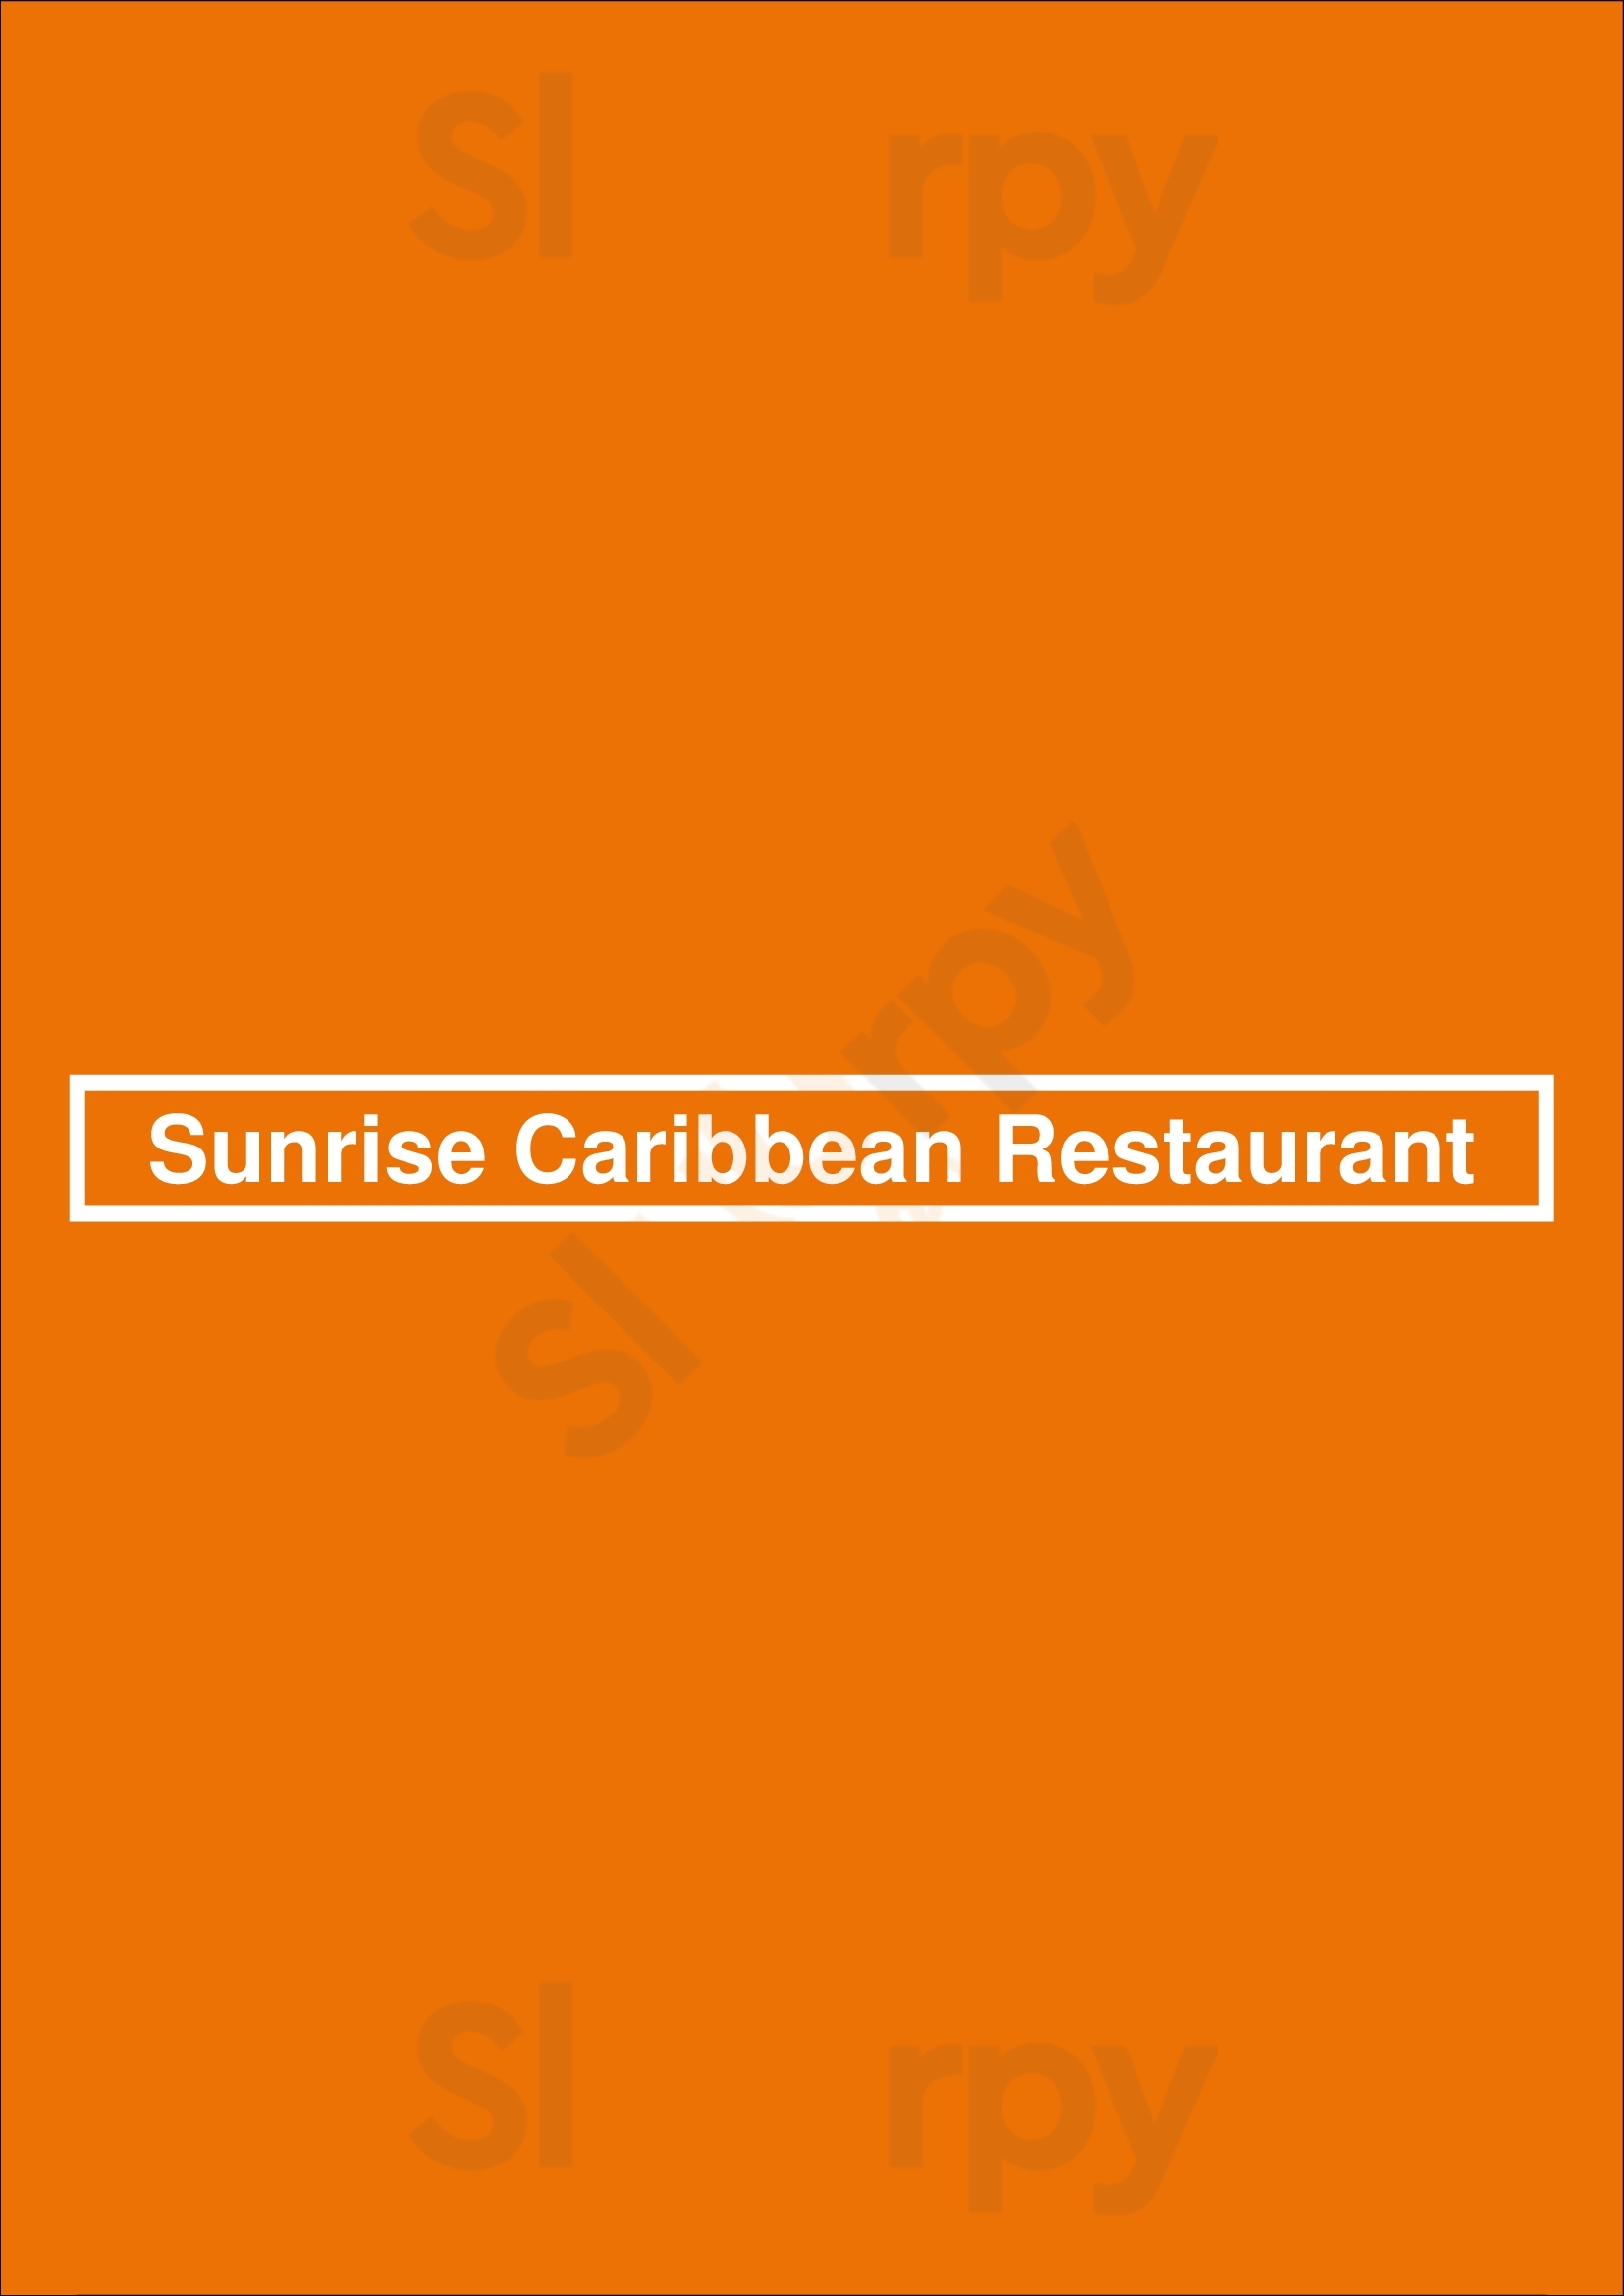 Sunrise Caribbean Restaurant Newmarket Menu - 1